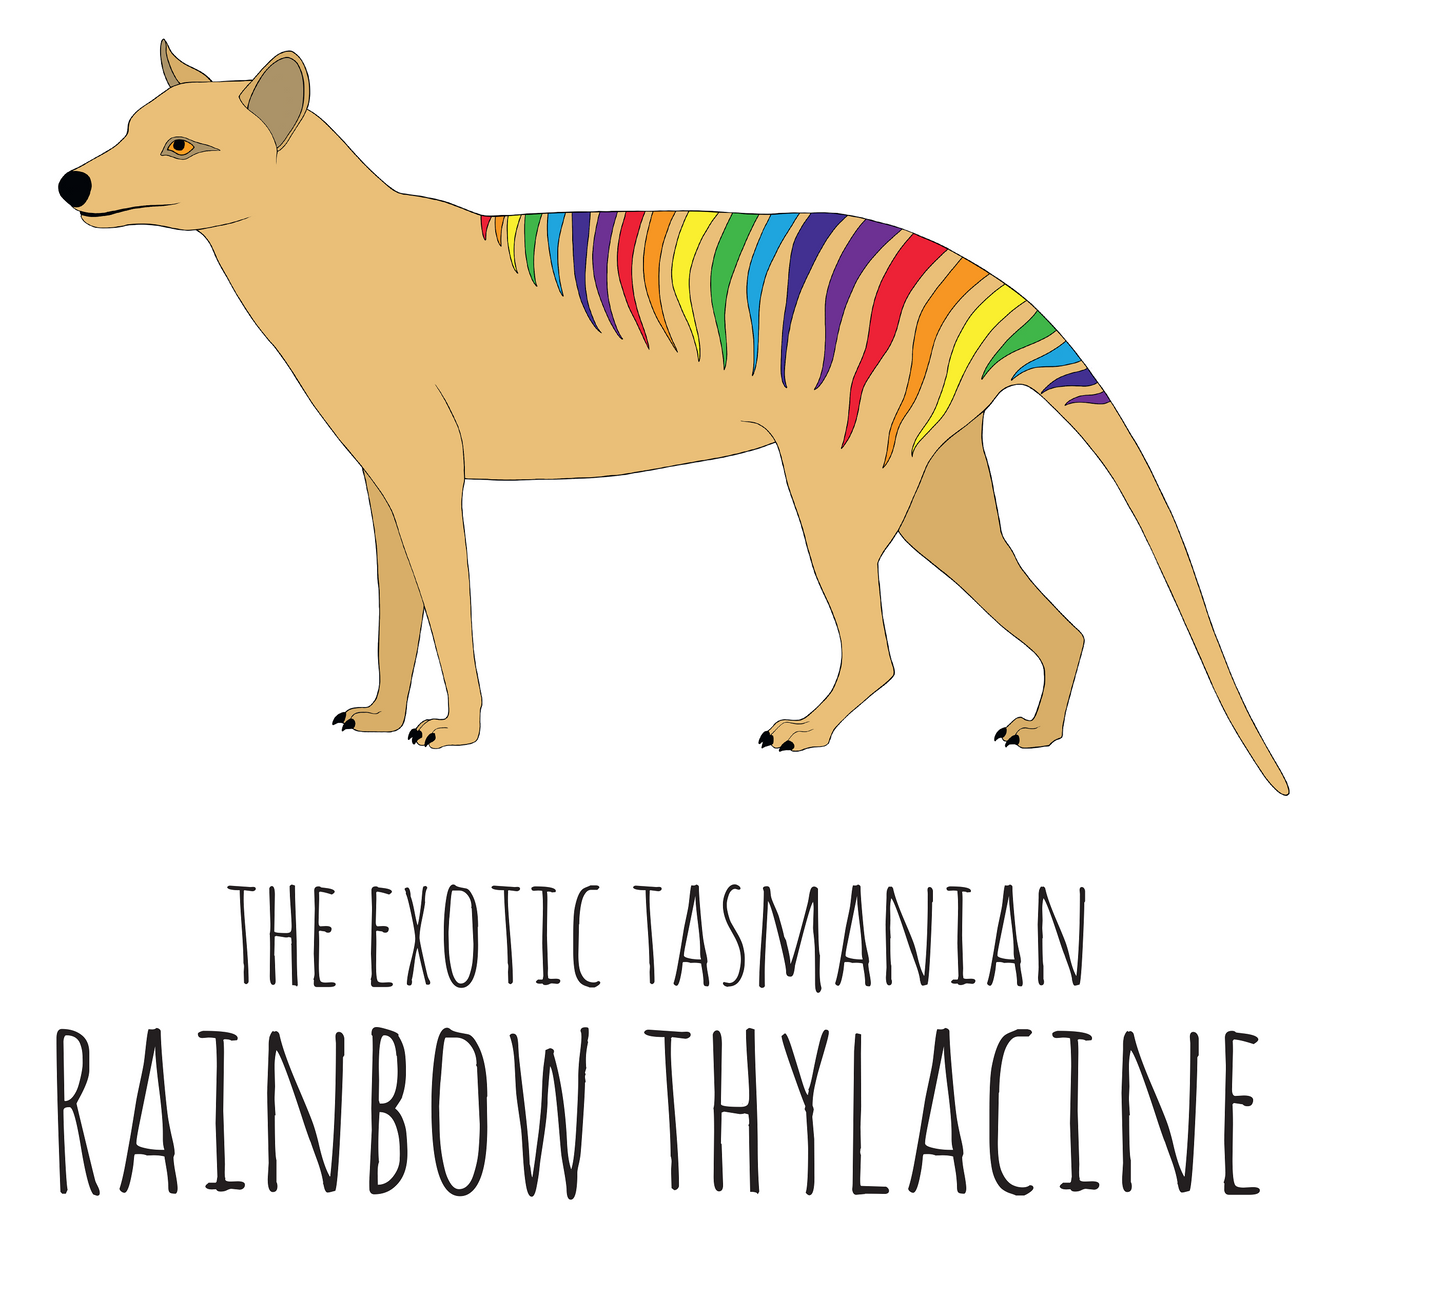 Rainbow Thylacine Tote Bag